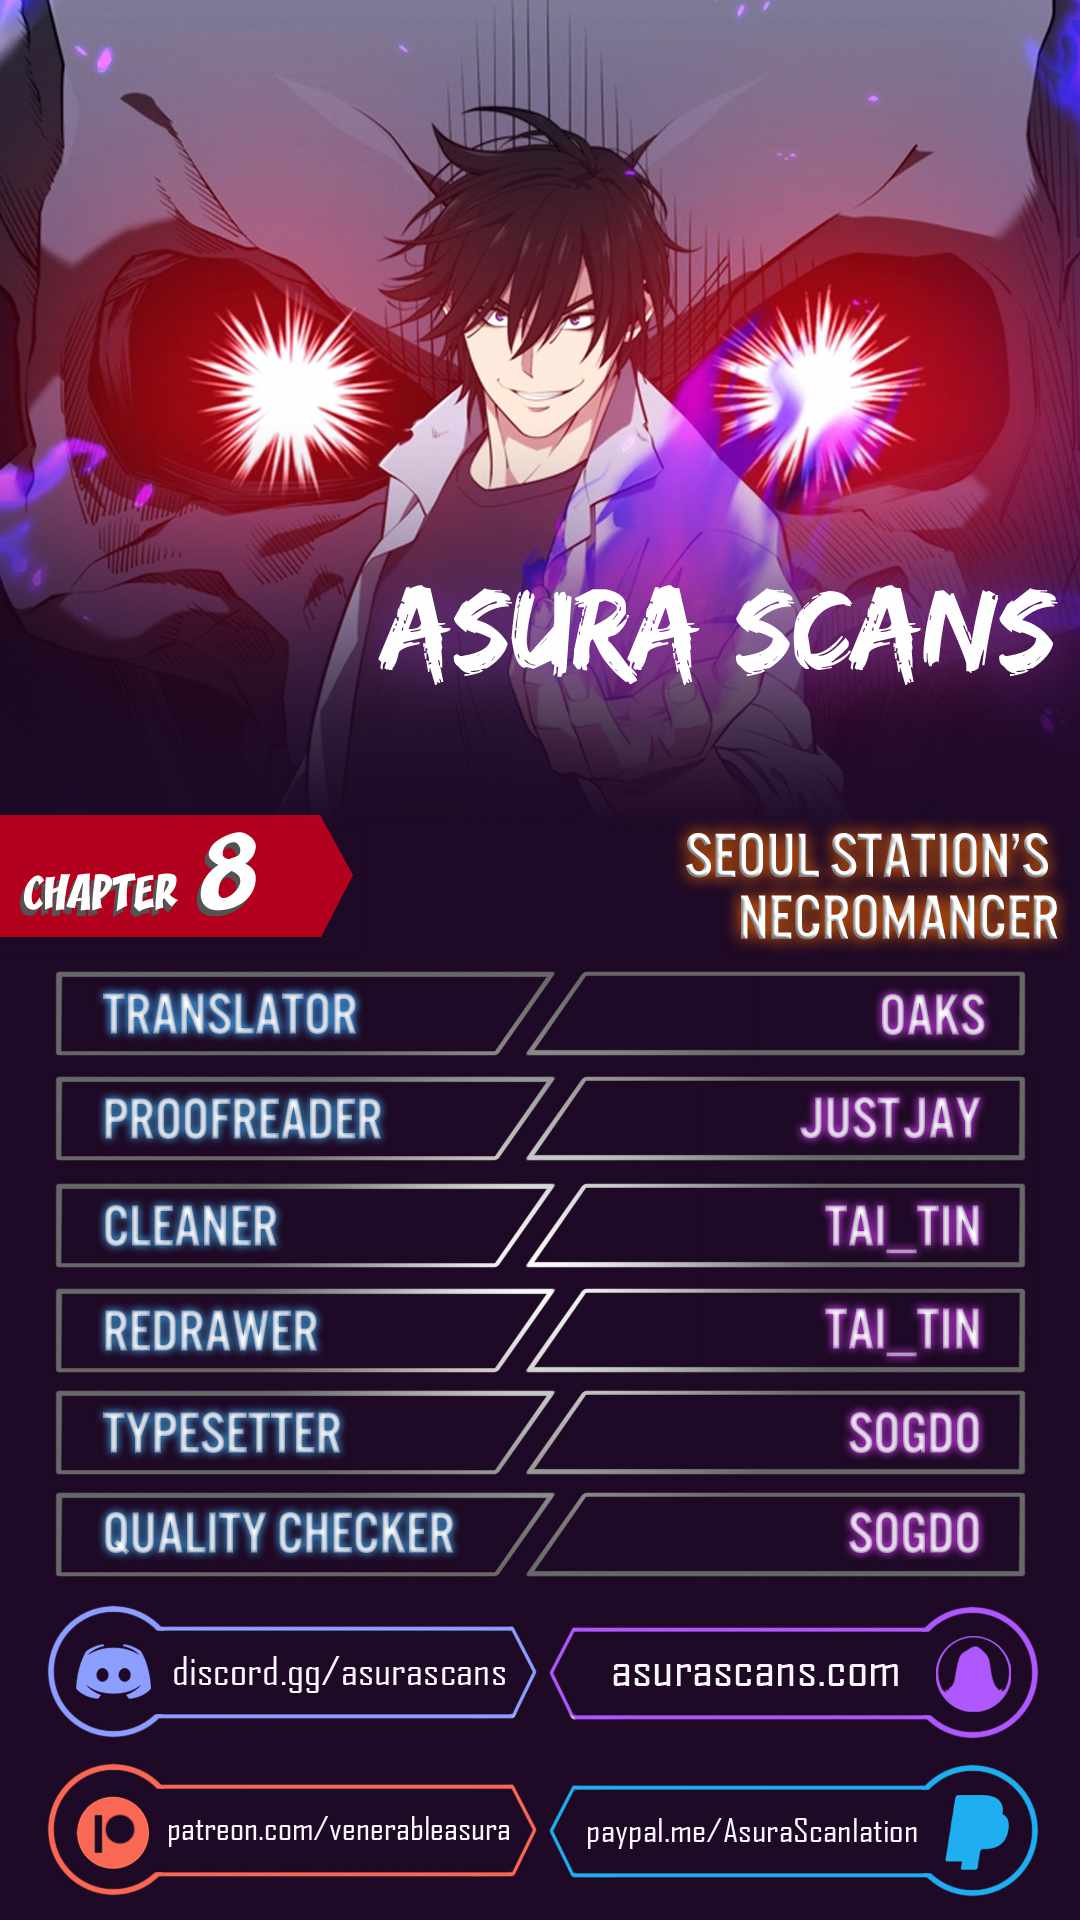 Seoul Station’s Necromancer chapter 8